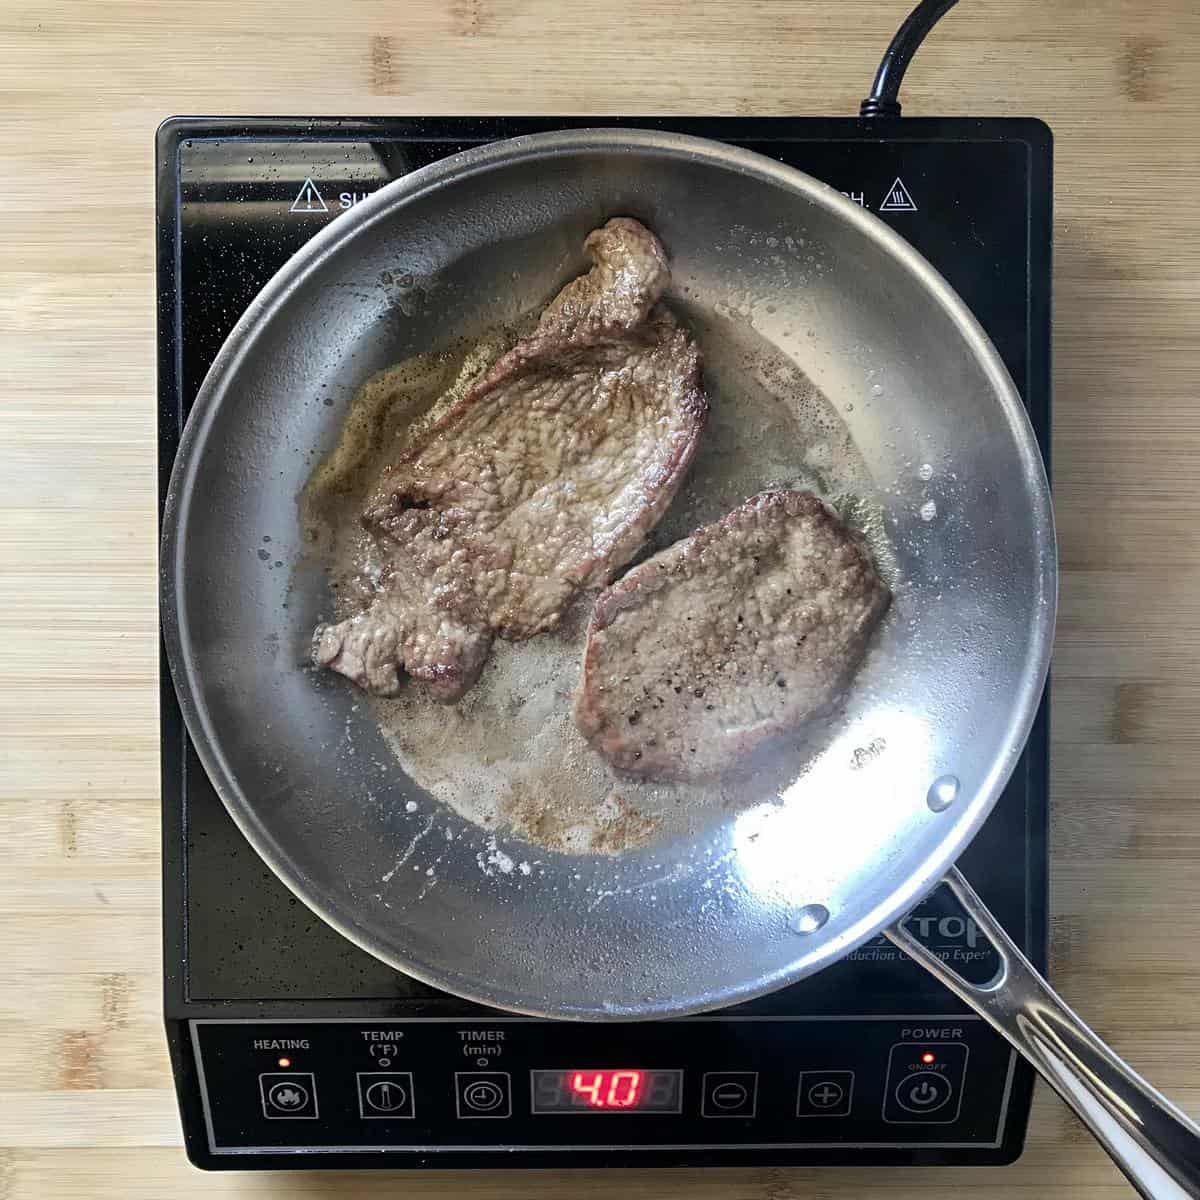 Pan fried veal scallopini.